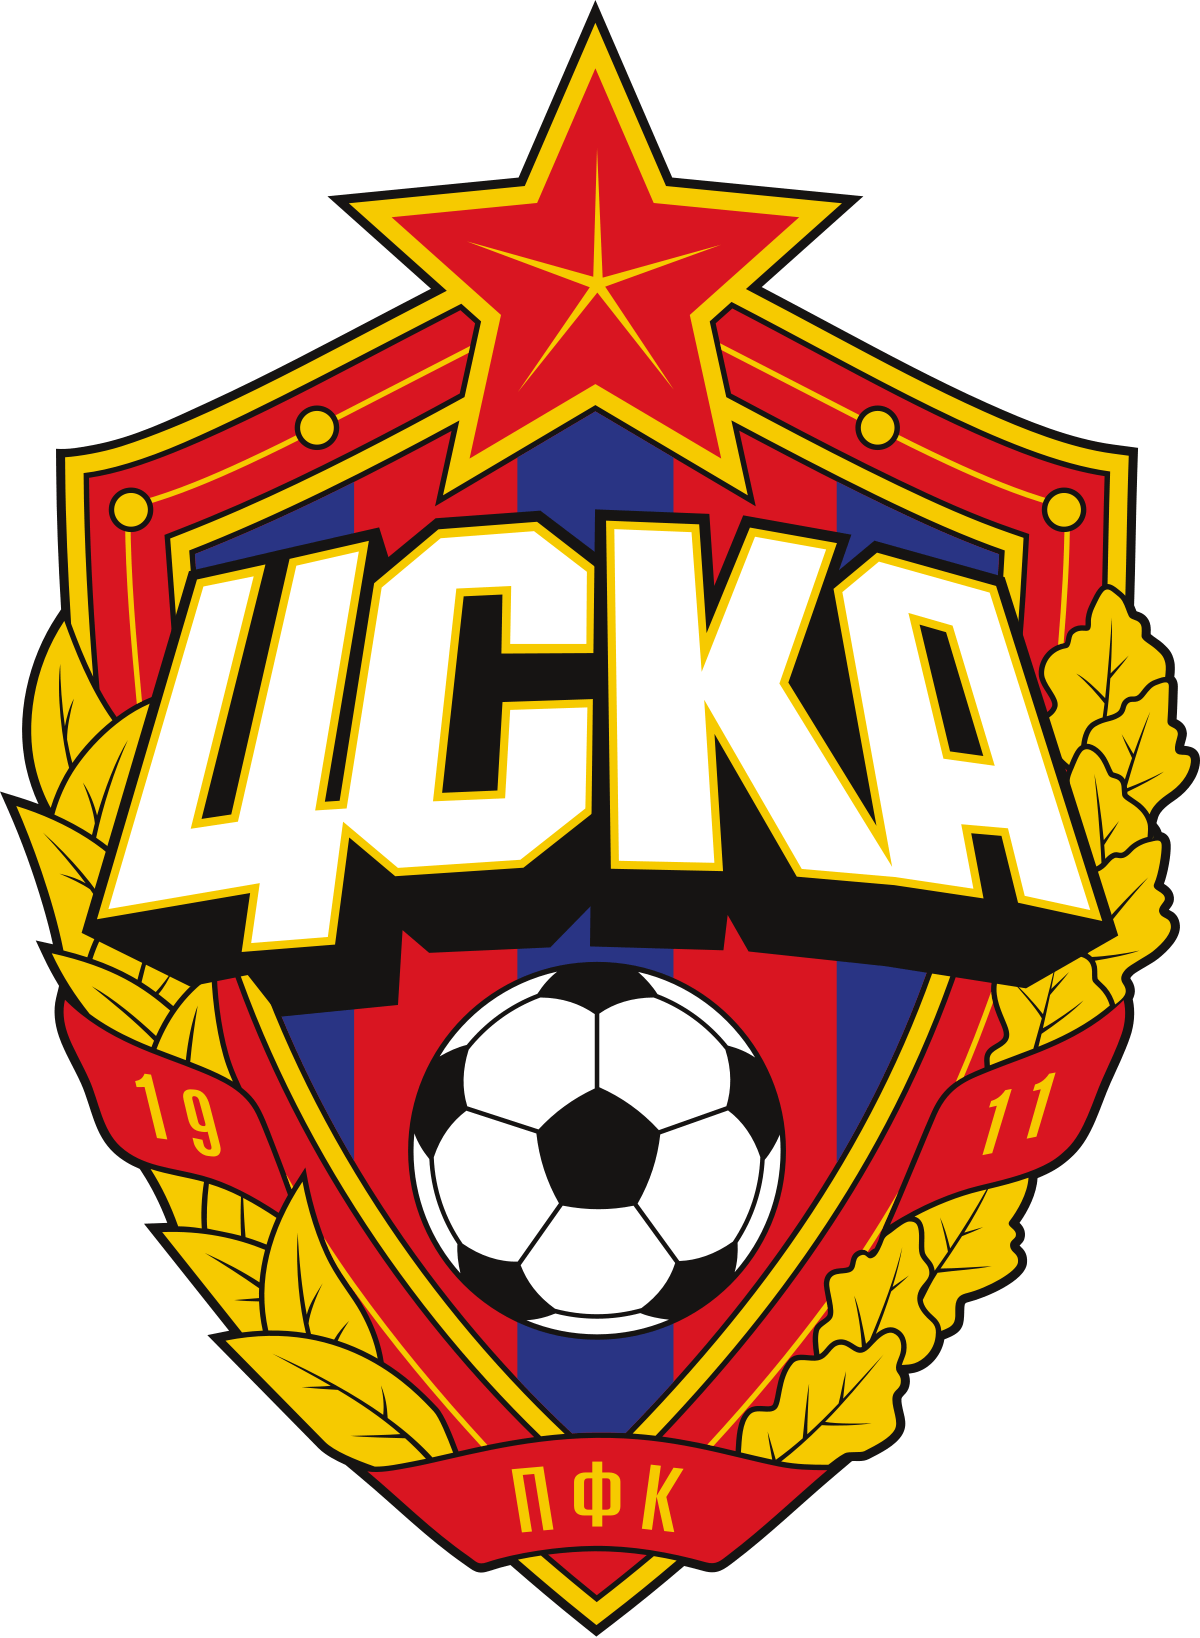 Professional Football Club Logo - PFC CSKA Moscow